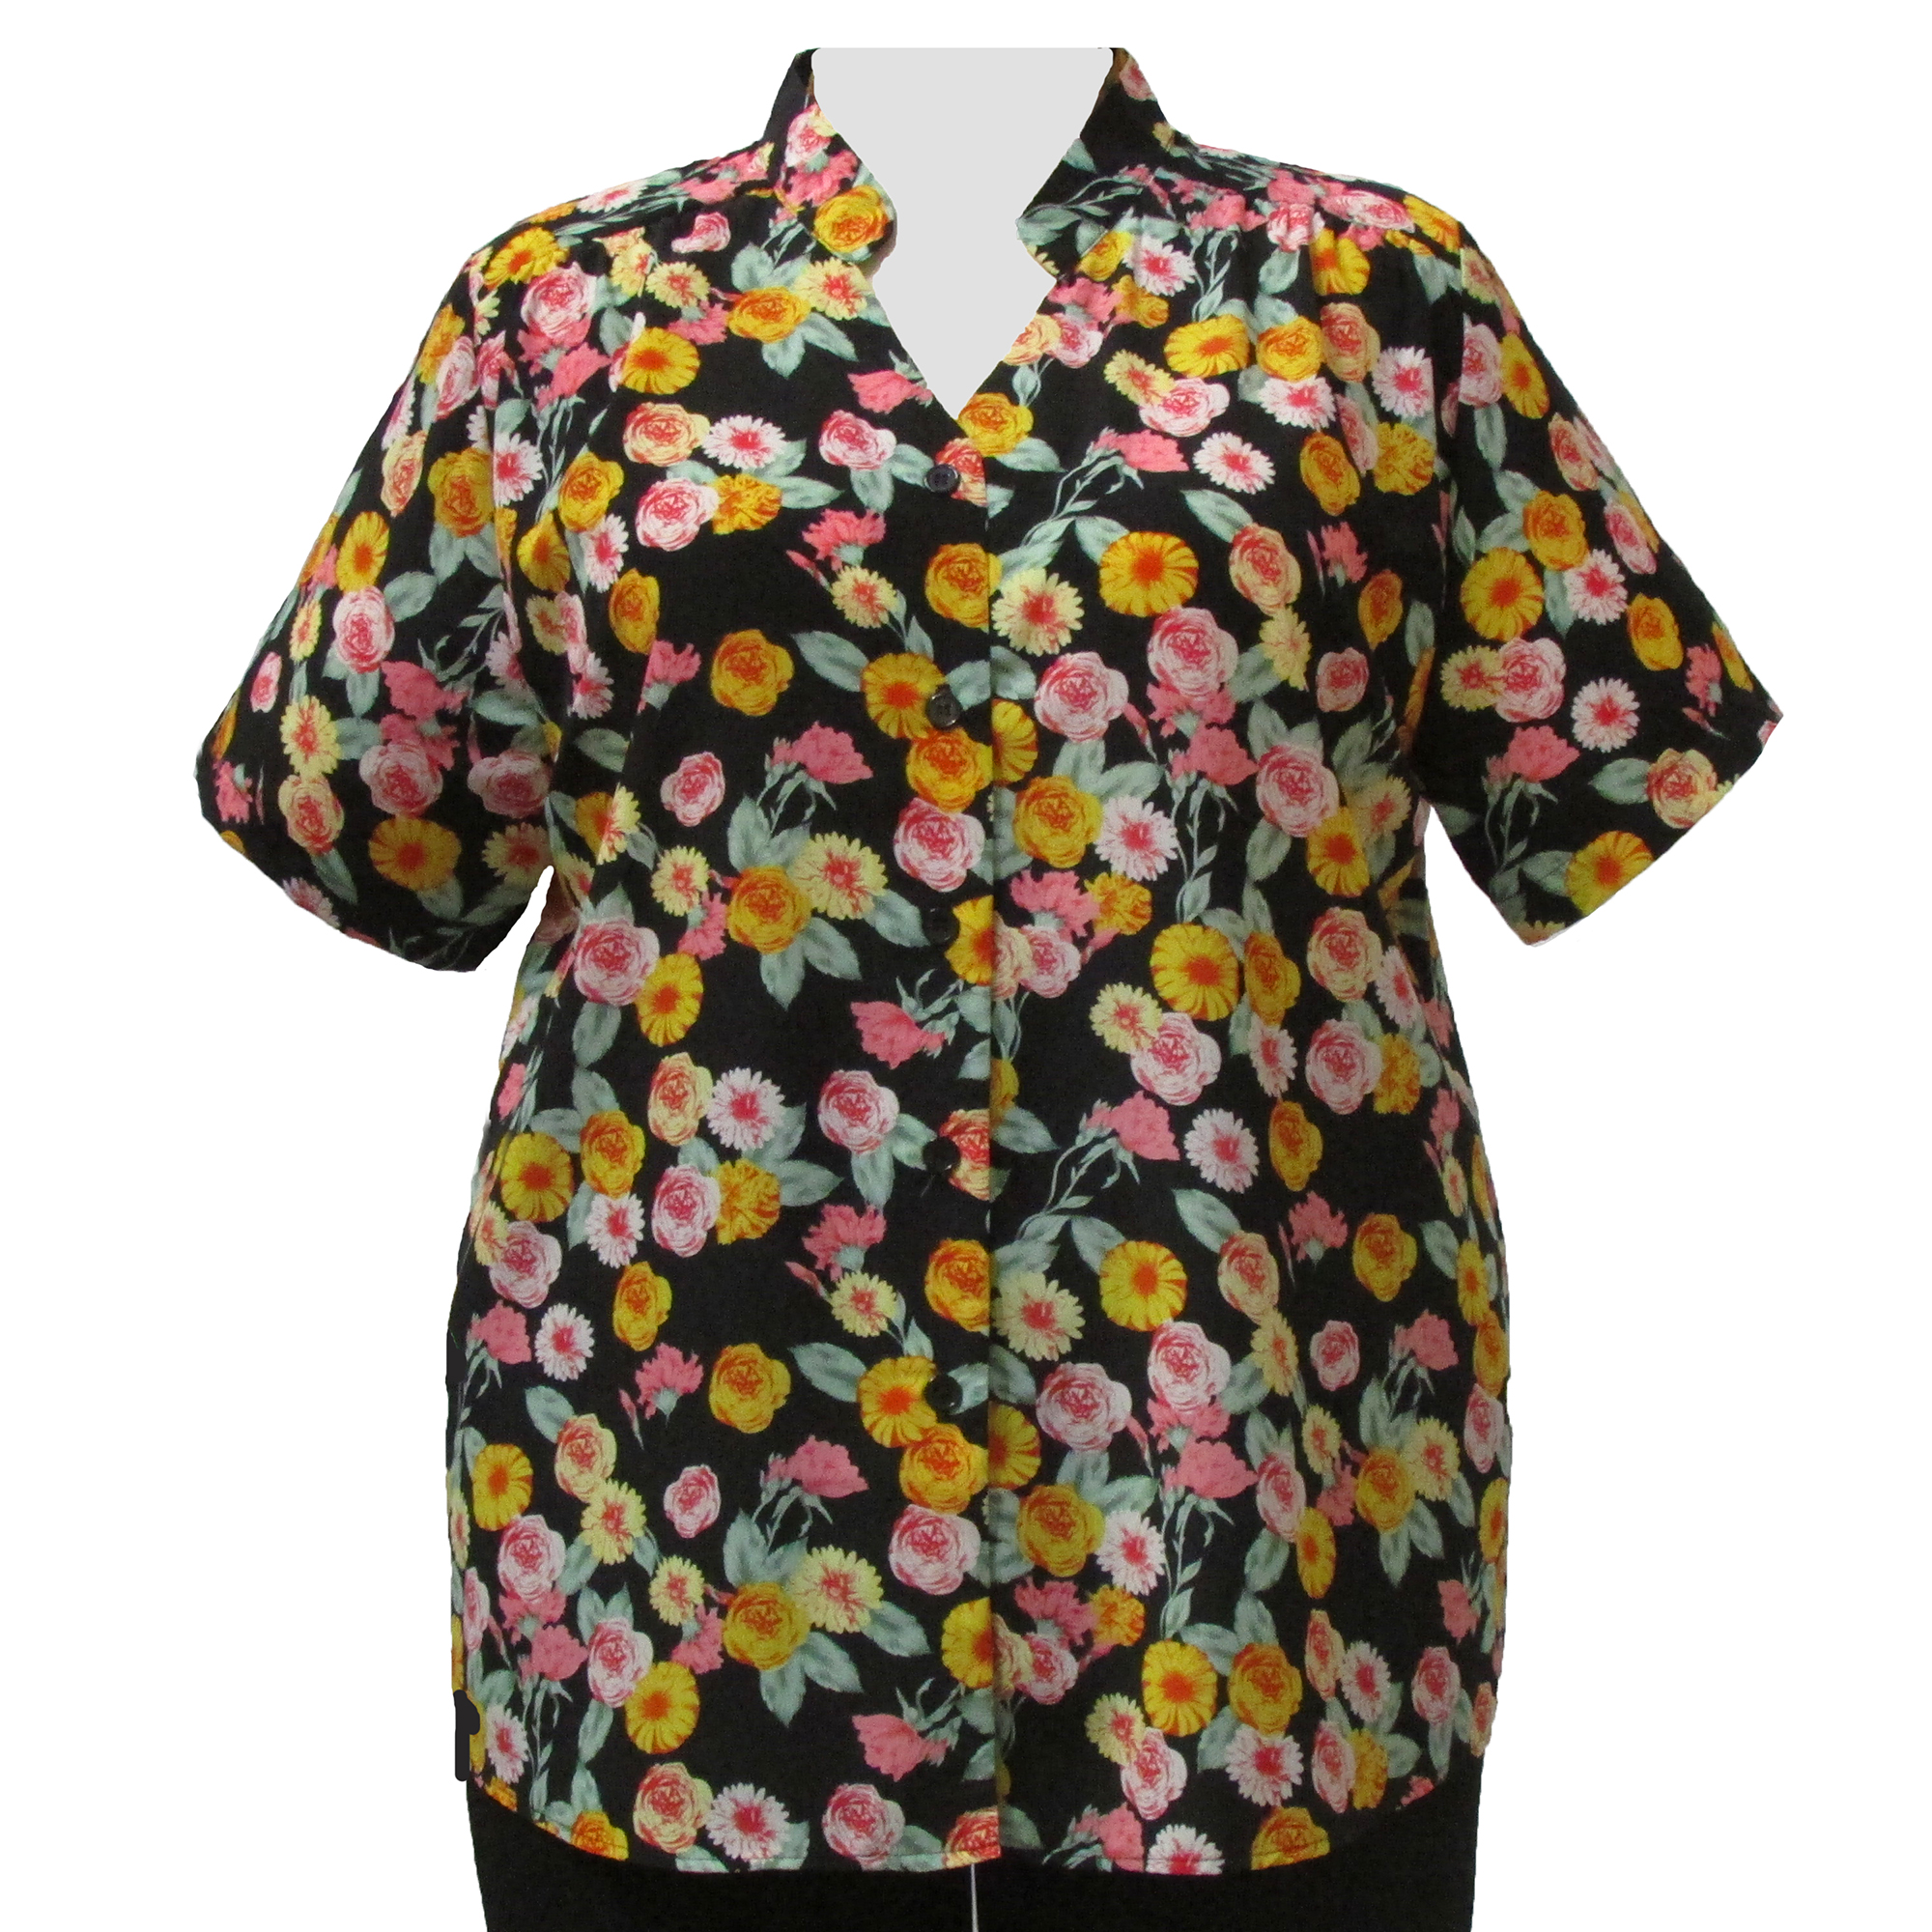 A Personal Touch Chrysanthemum Bouquet Mandarin Collar V-Neck Tunic Plus Size Woman's Blouse